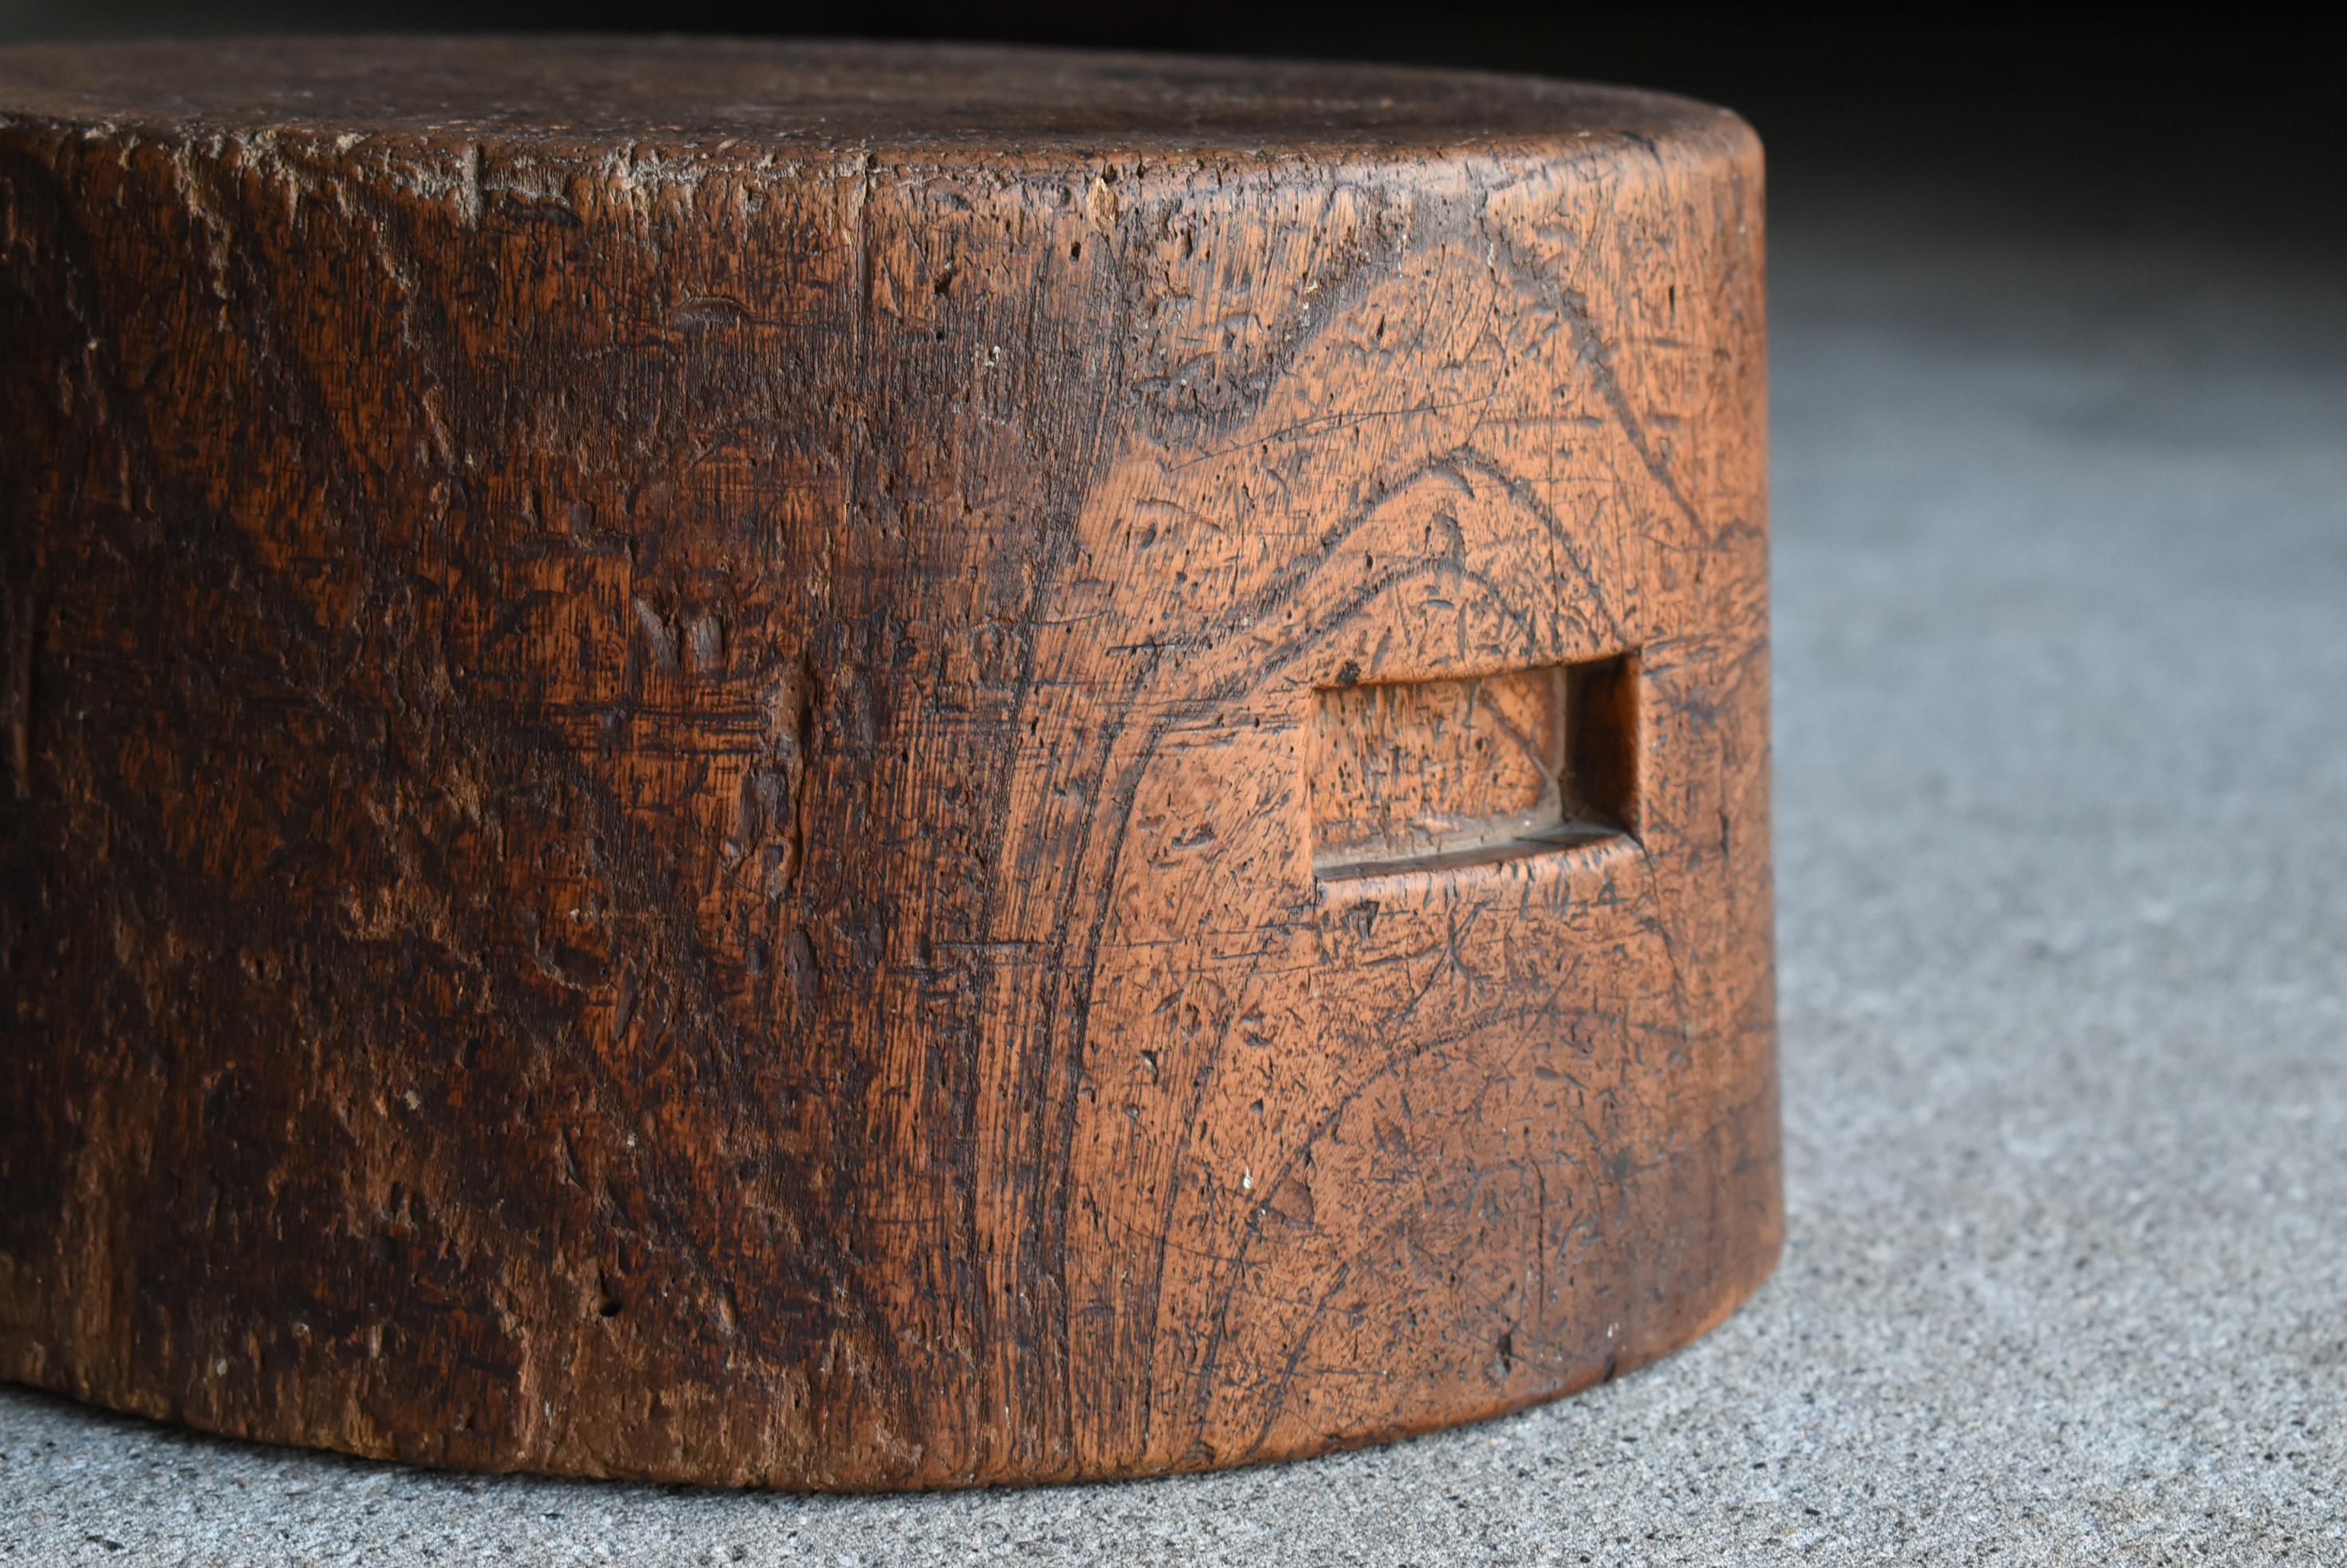 Japanese Antique Wooden Block Stool 1860s-1900s / Wabi Sabi Wood Chair Primitive 1